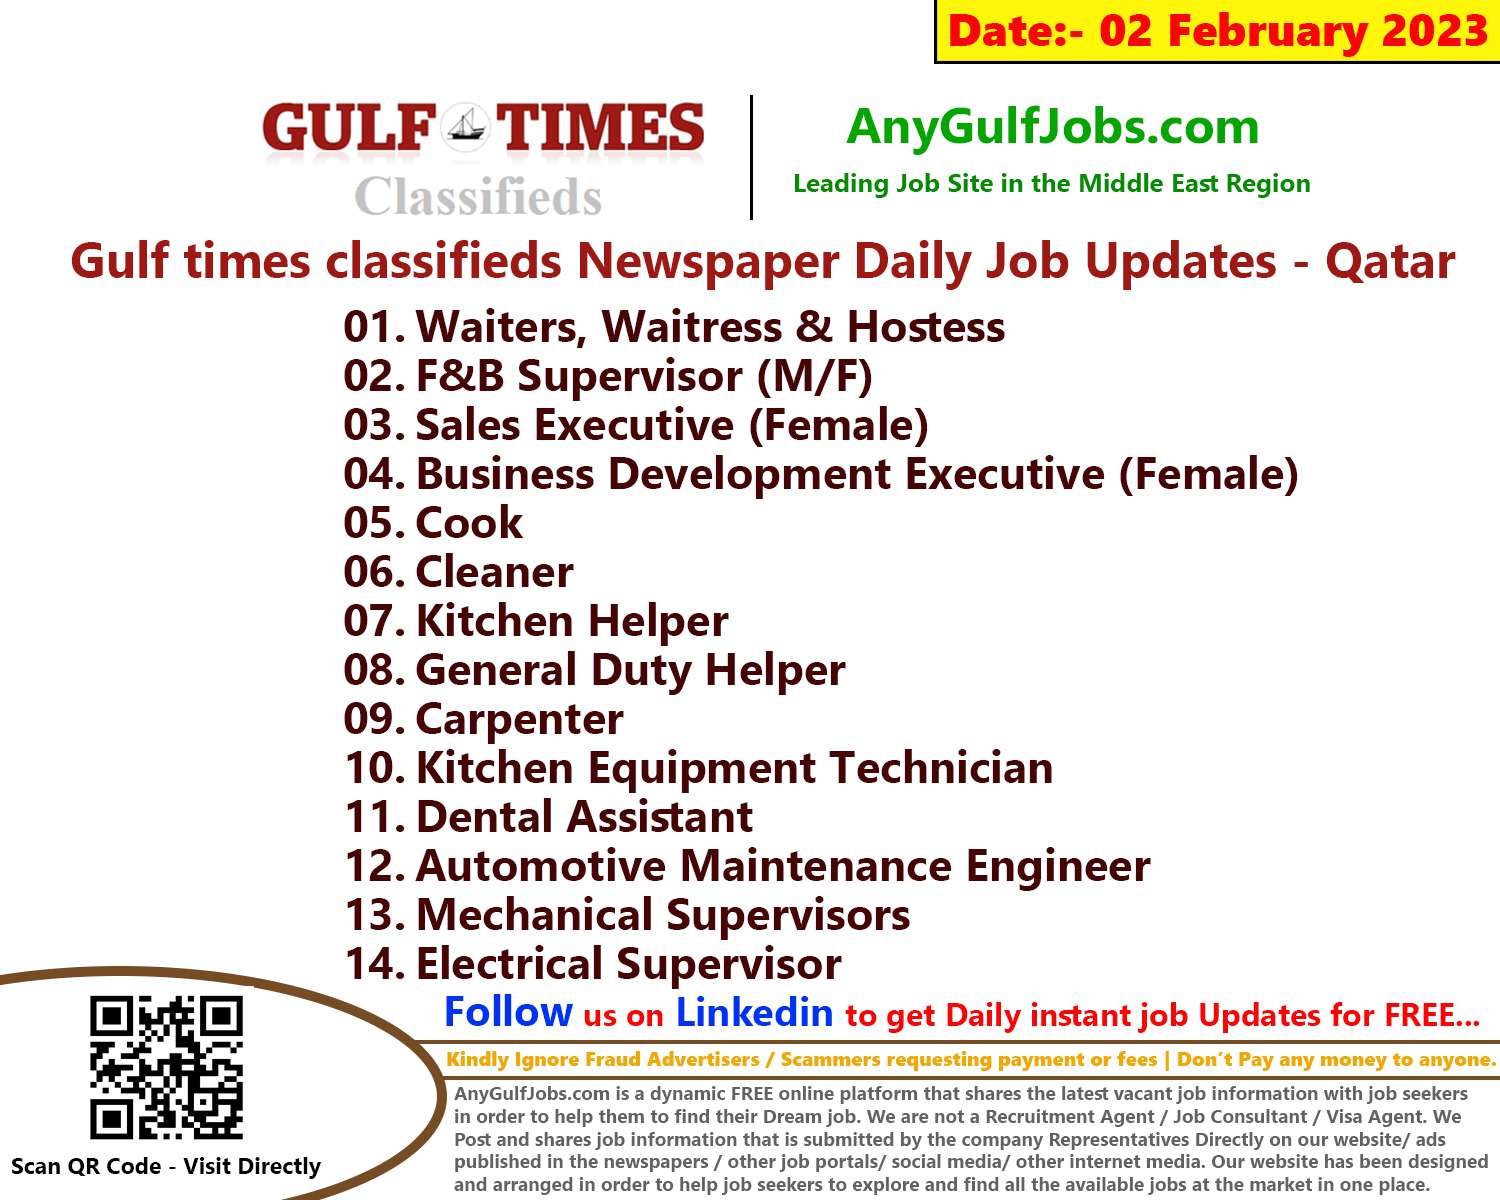 Gulf times classifieds Job Vacancies Qatar - 02 February 2023